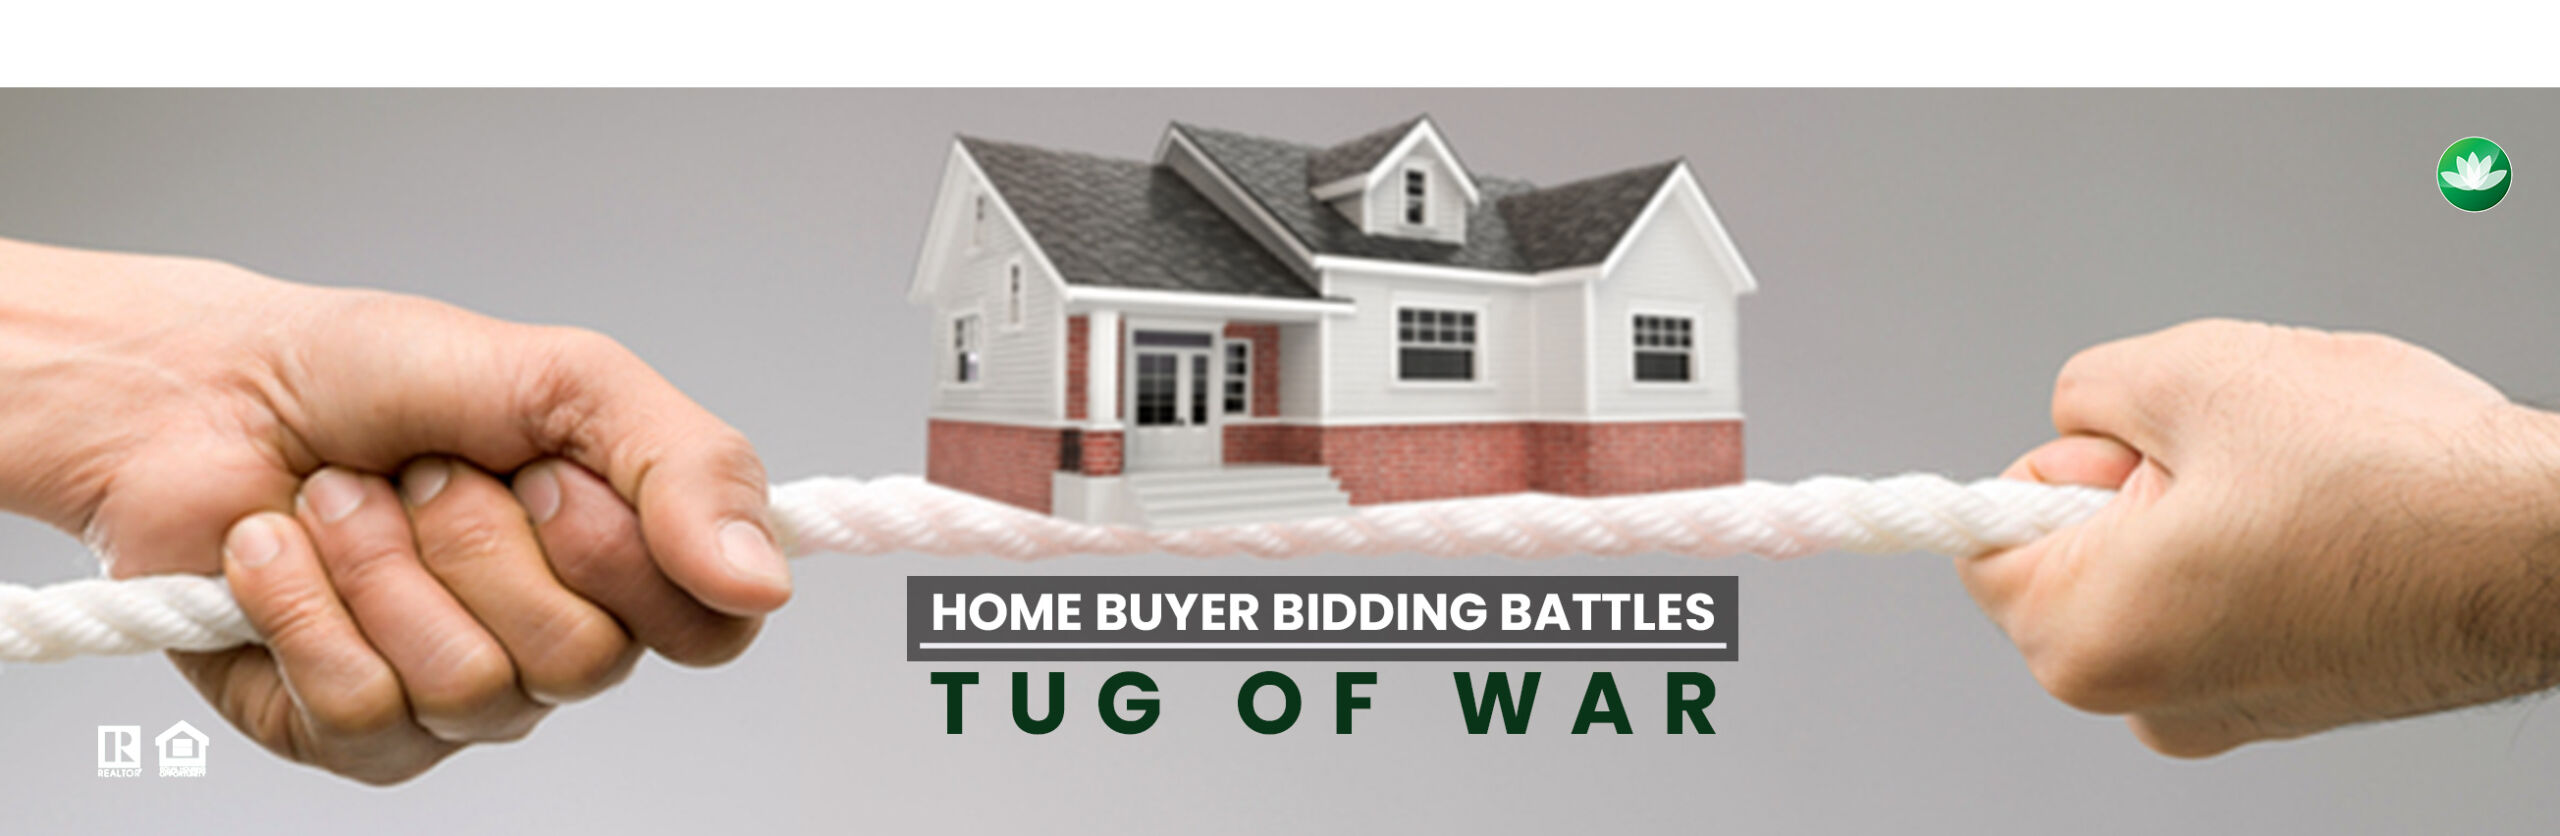 Home Buyer Bidding Battles